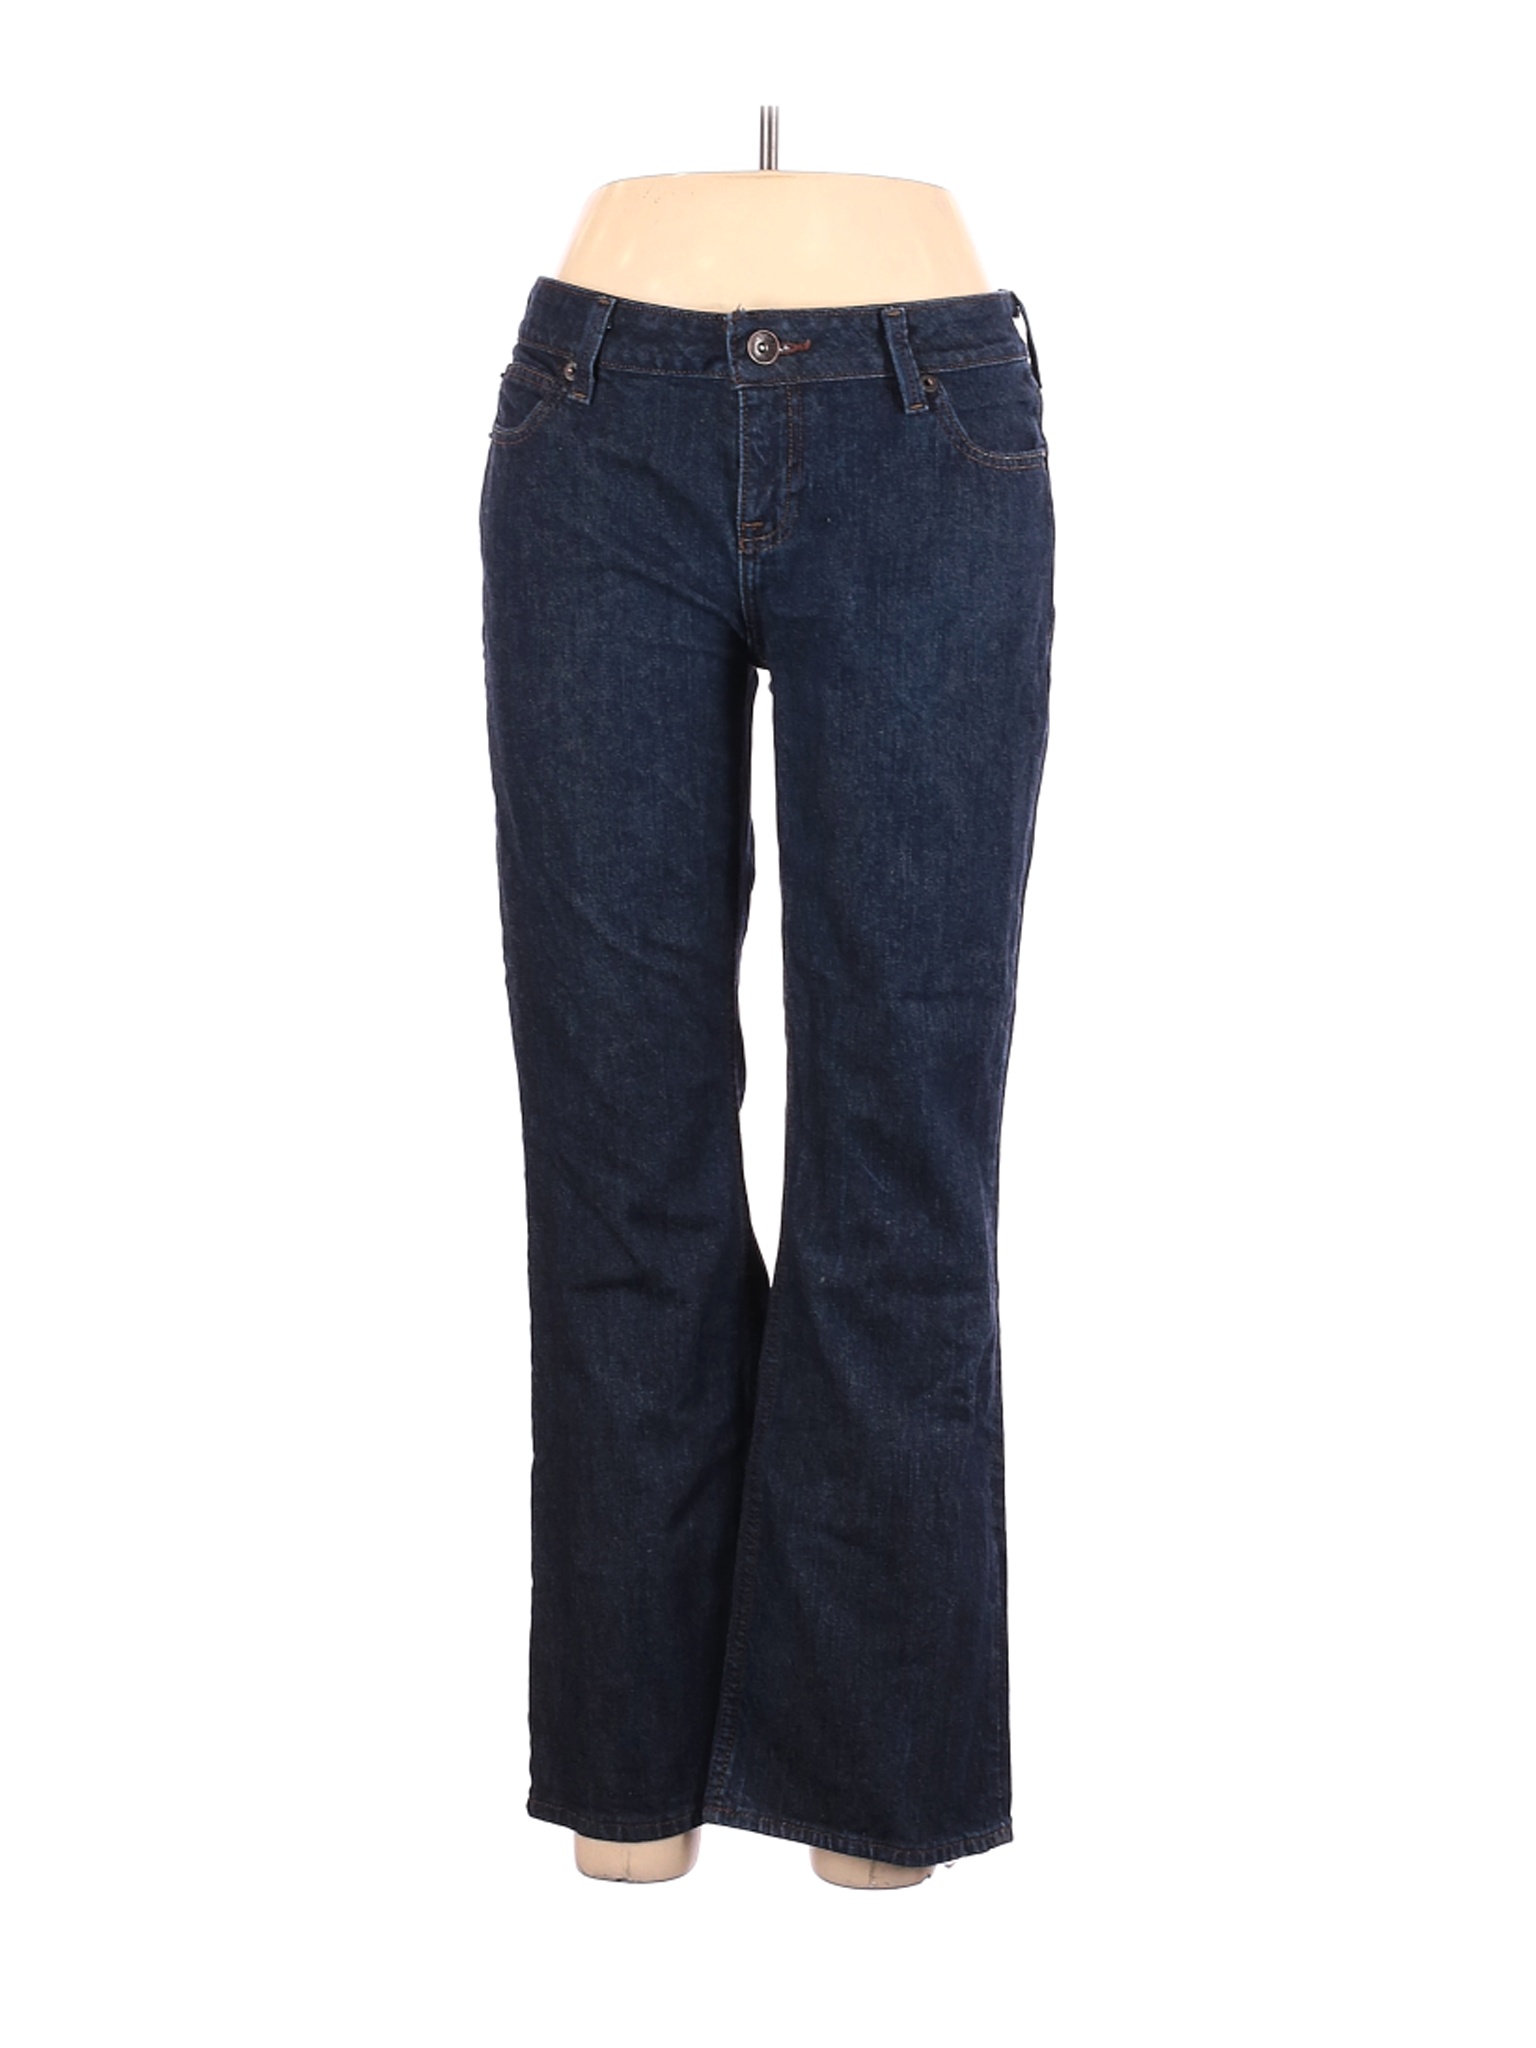 Apt. 9 Women Blue Jeans 12 Petites | eBay